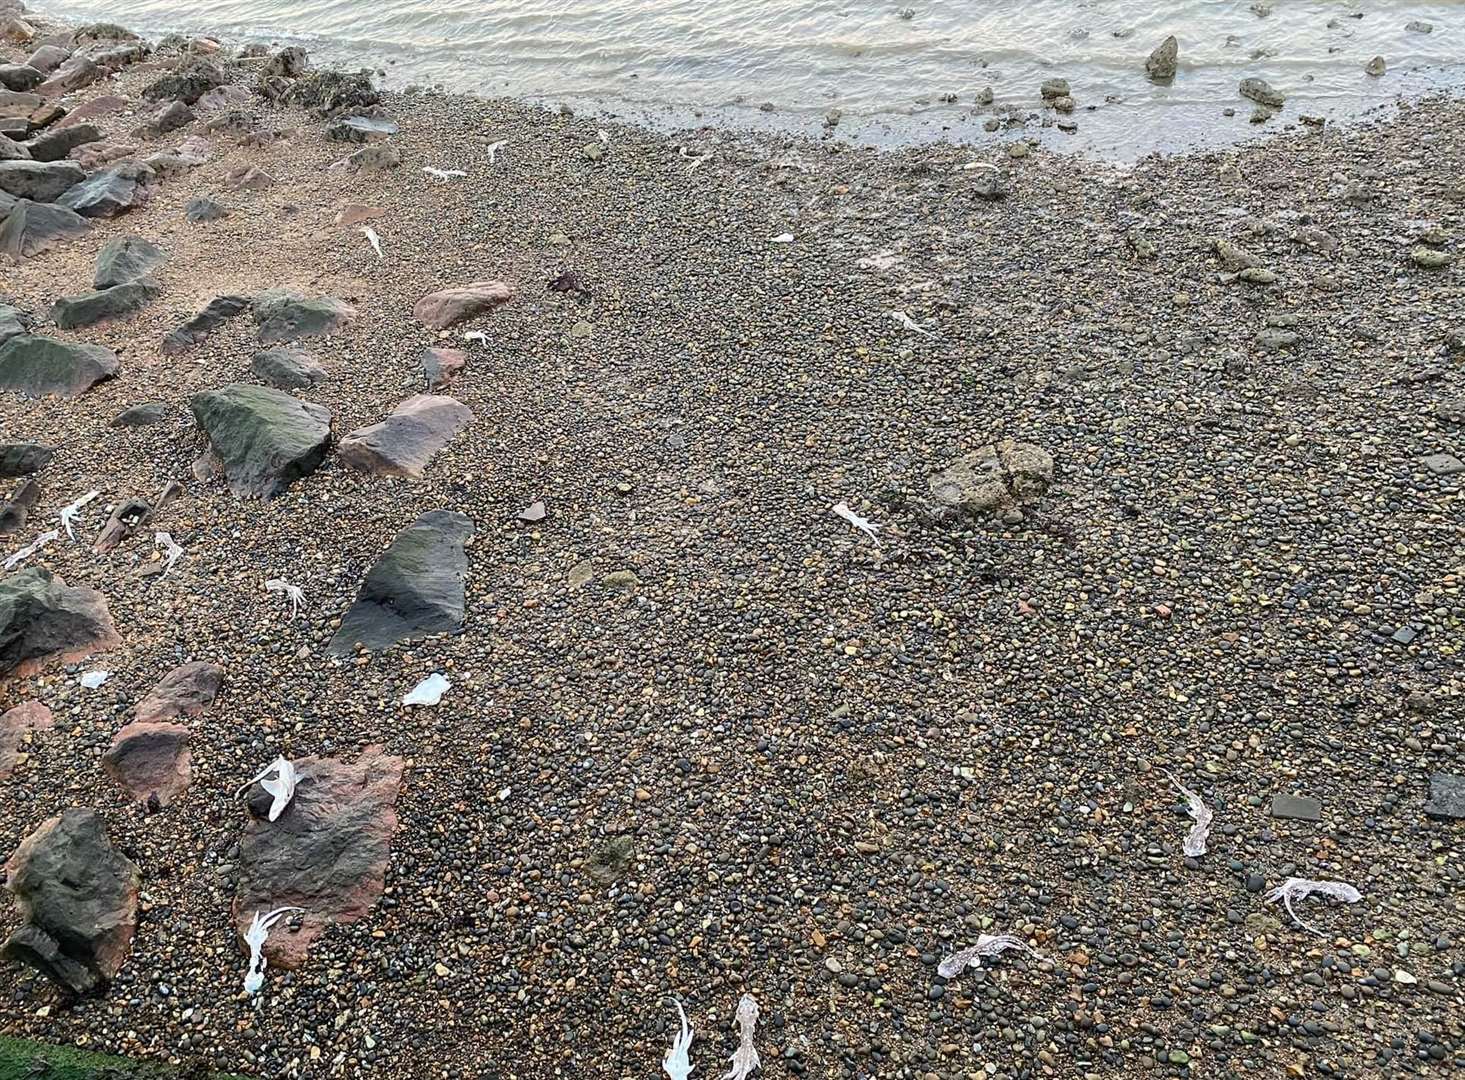 The dead sea creatures were discovered near Hampton Pier. Picture: Kelly Cullen